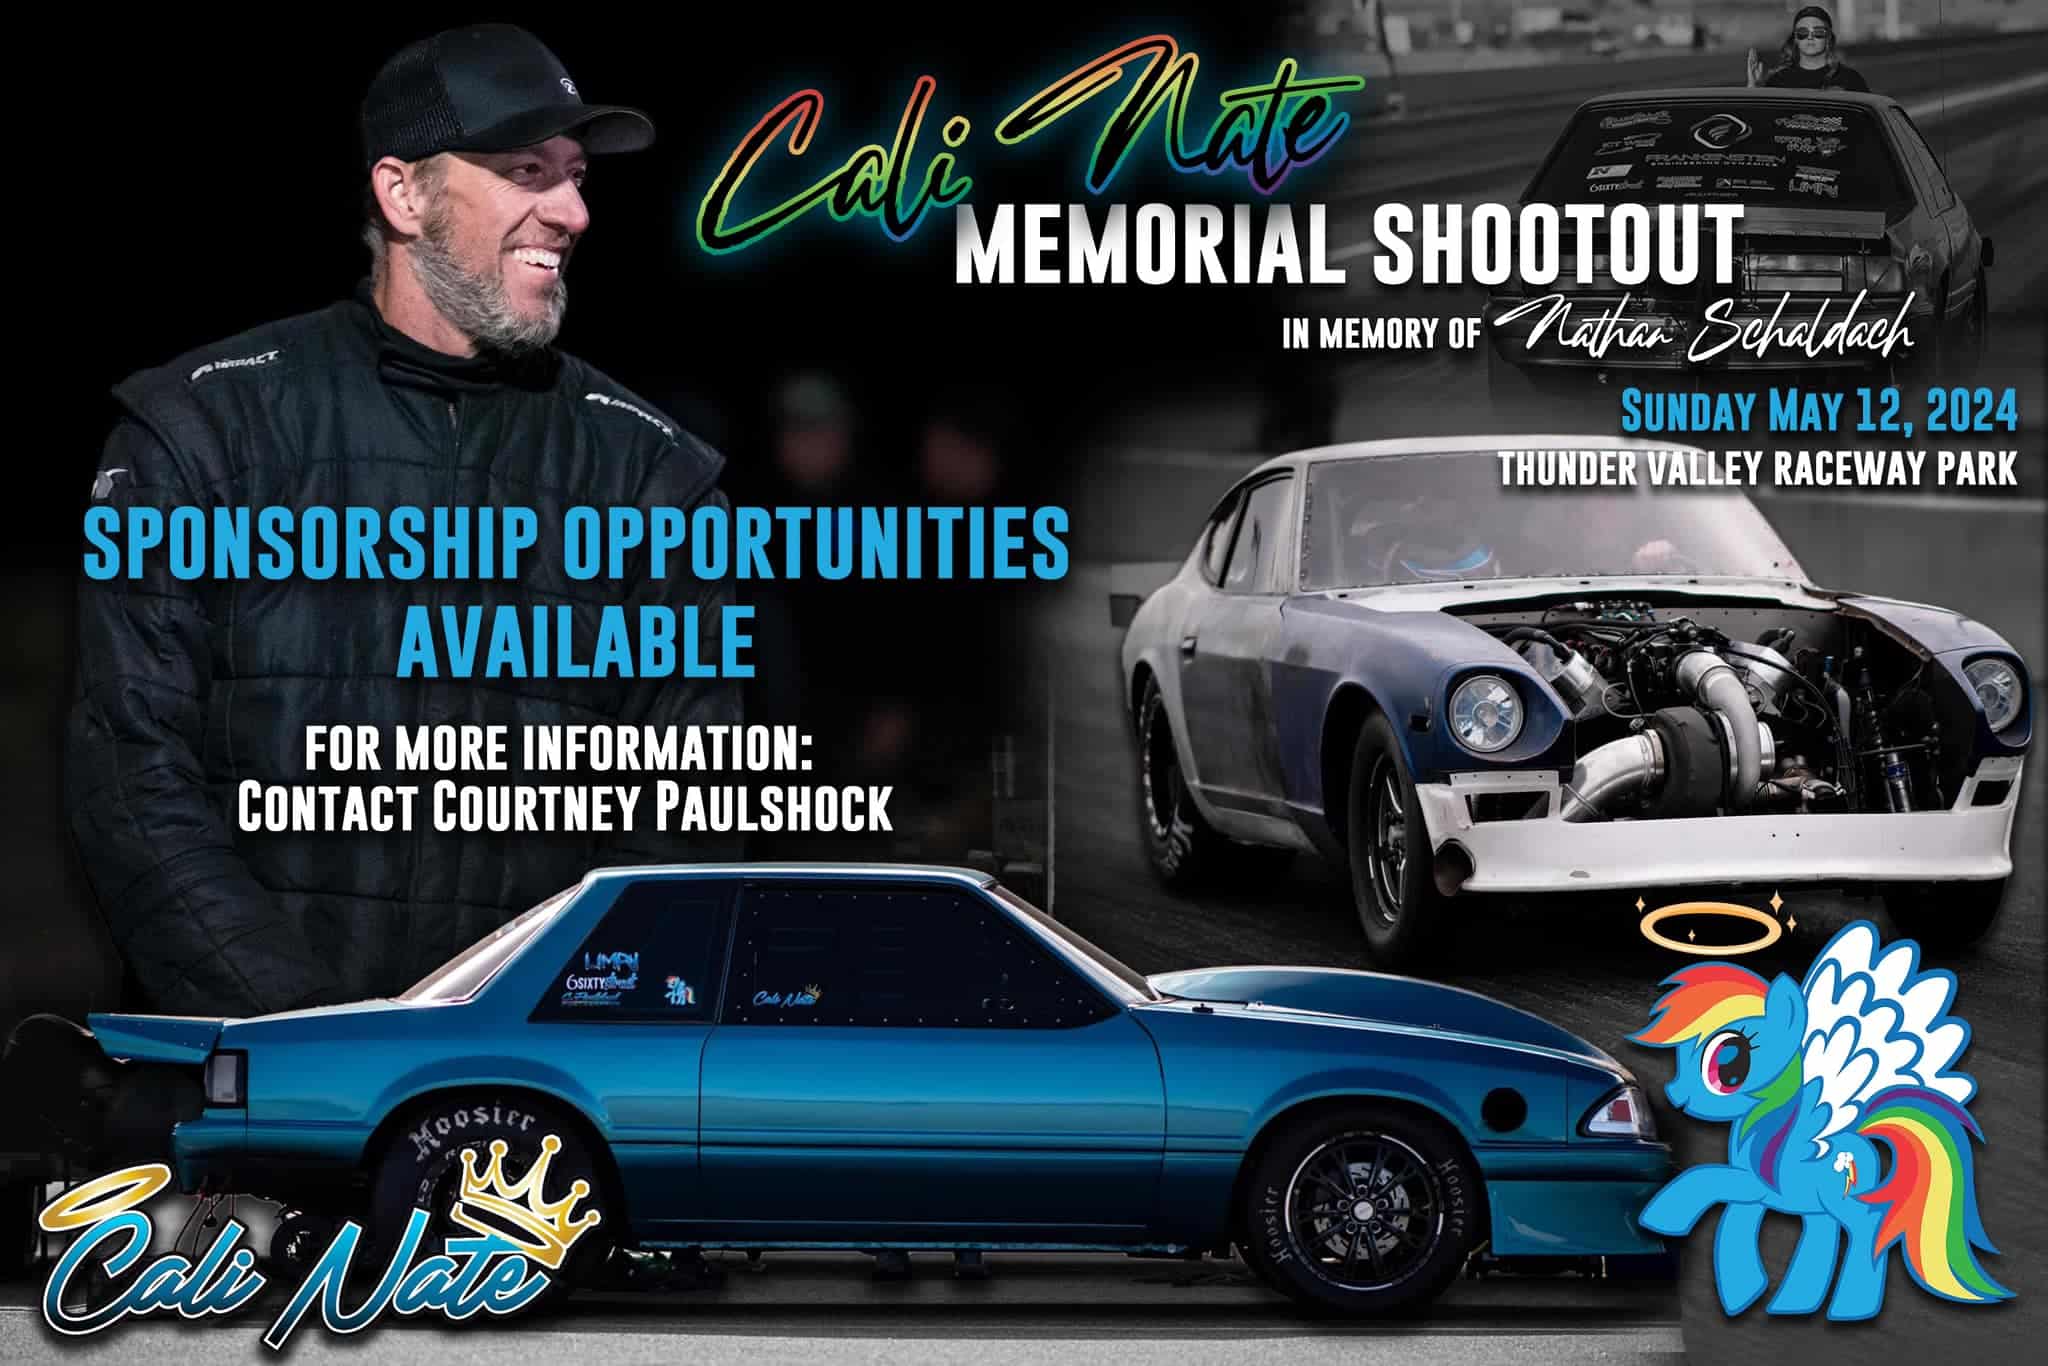 Cali Nate Memorial Shootout